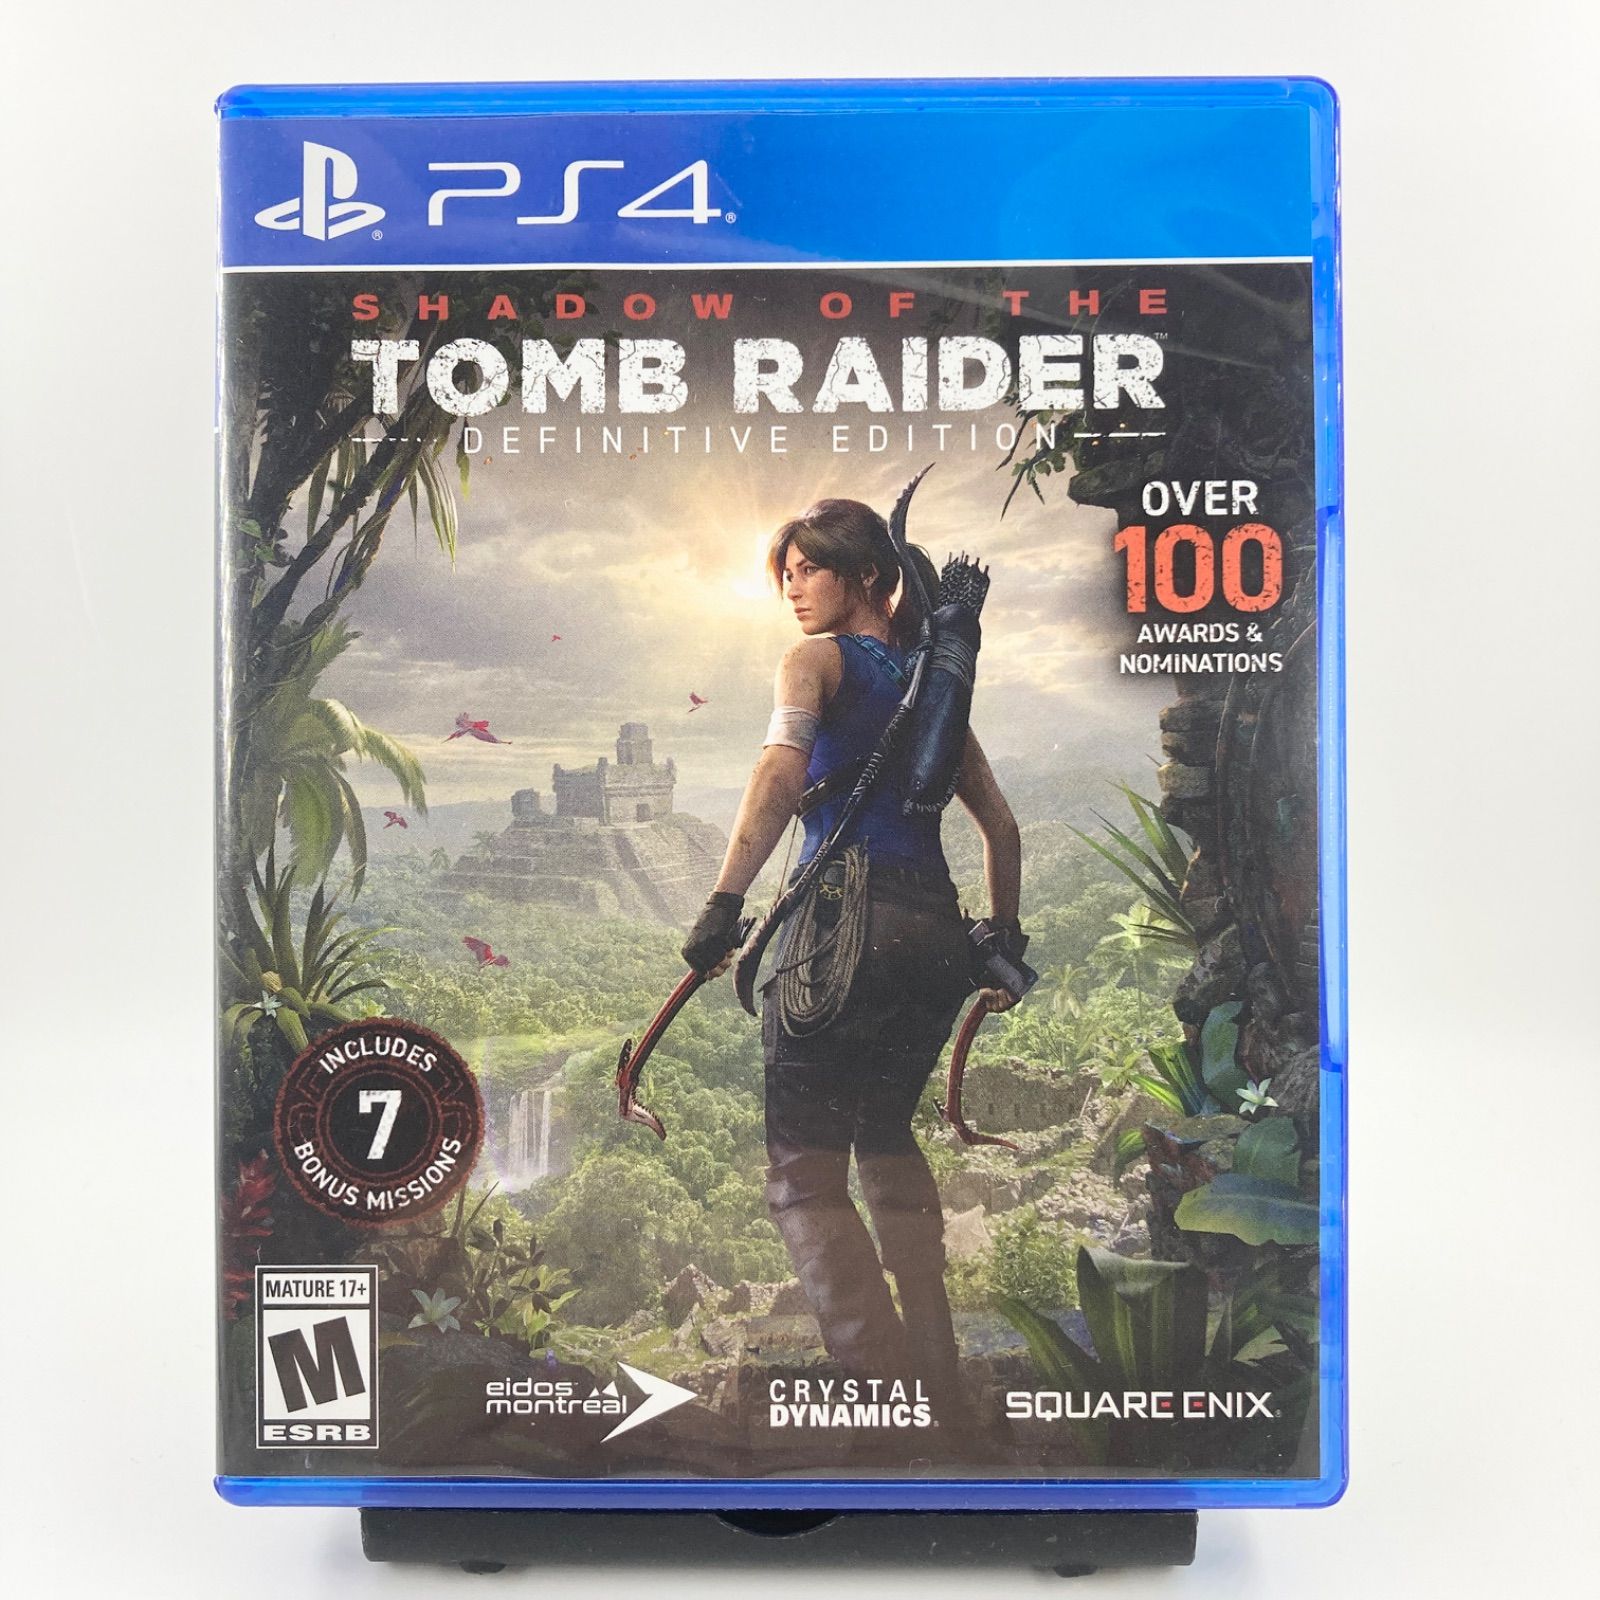 Tomb Raider Definitive Edition (輸入版:北米) - PS4